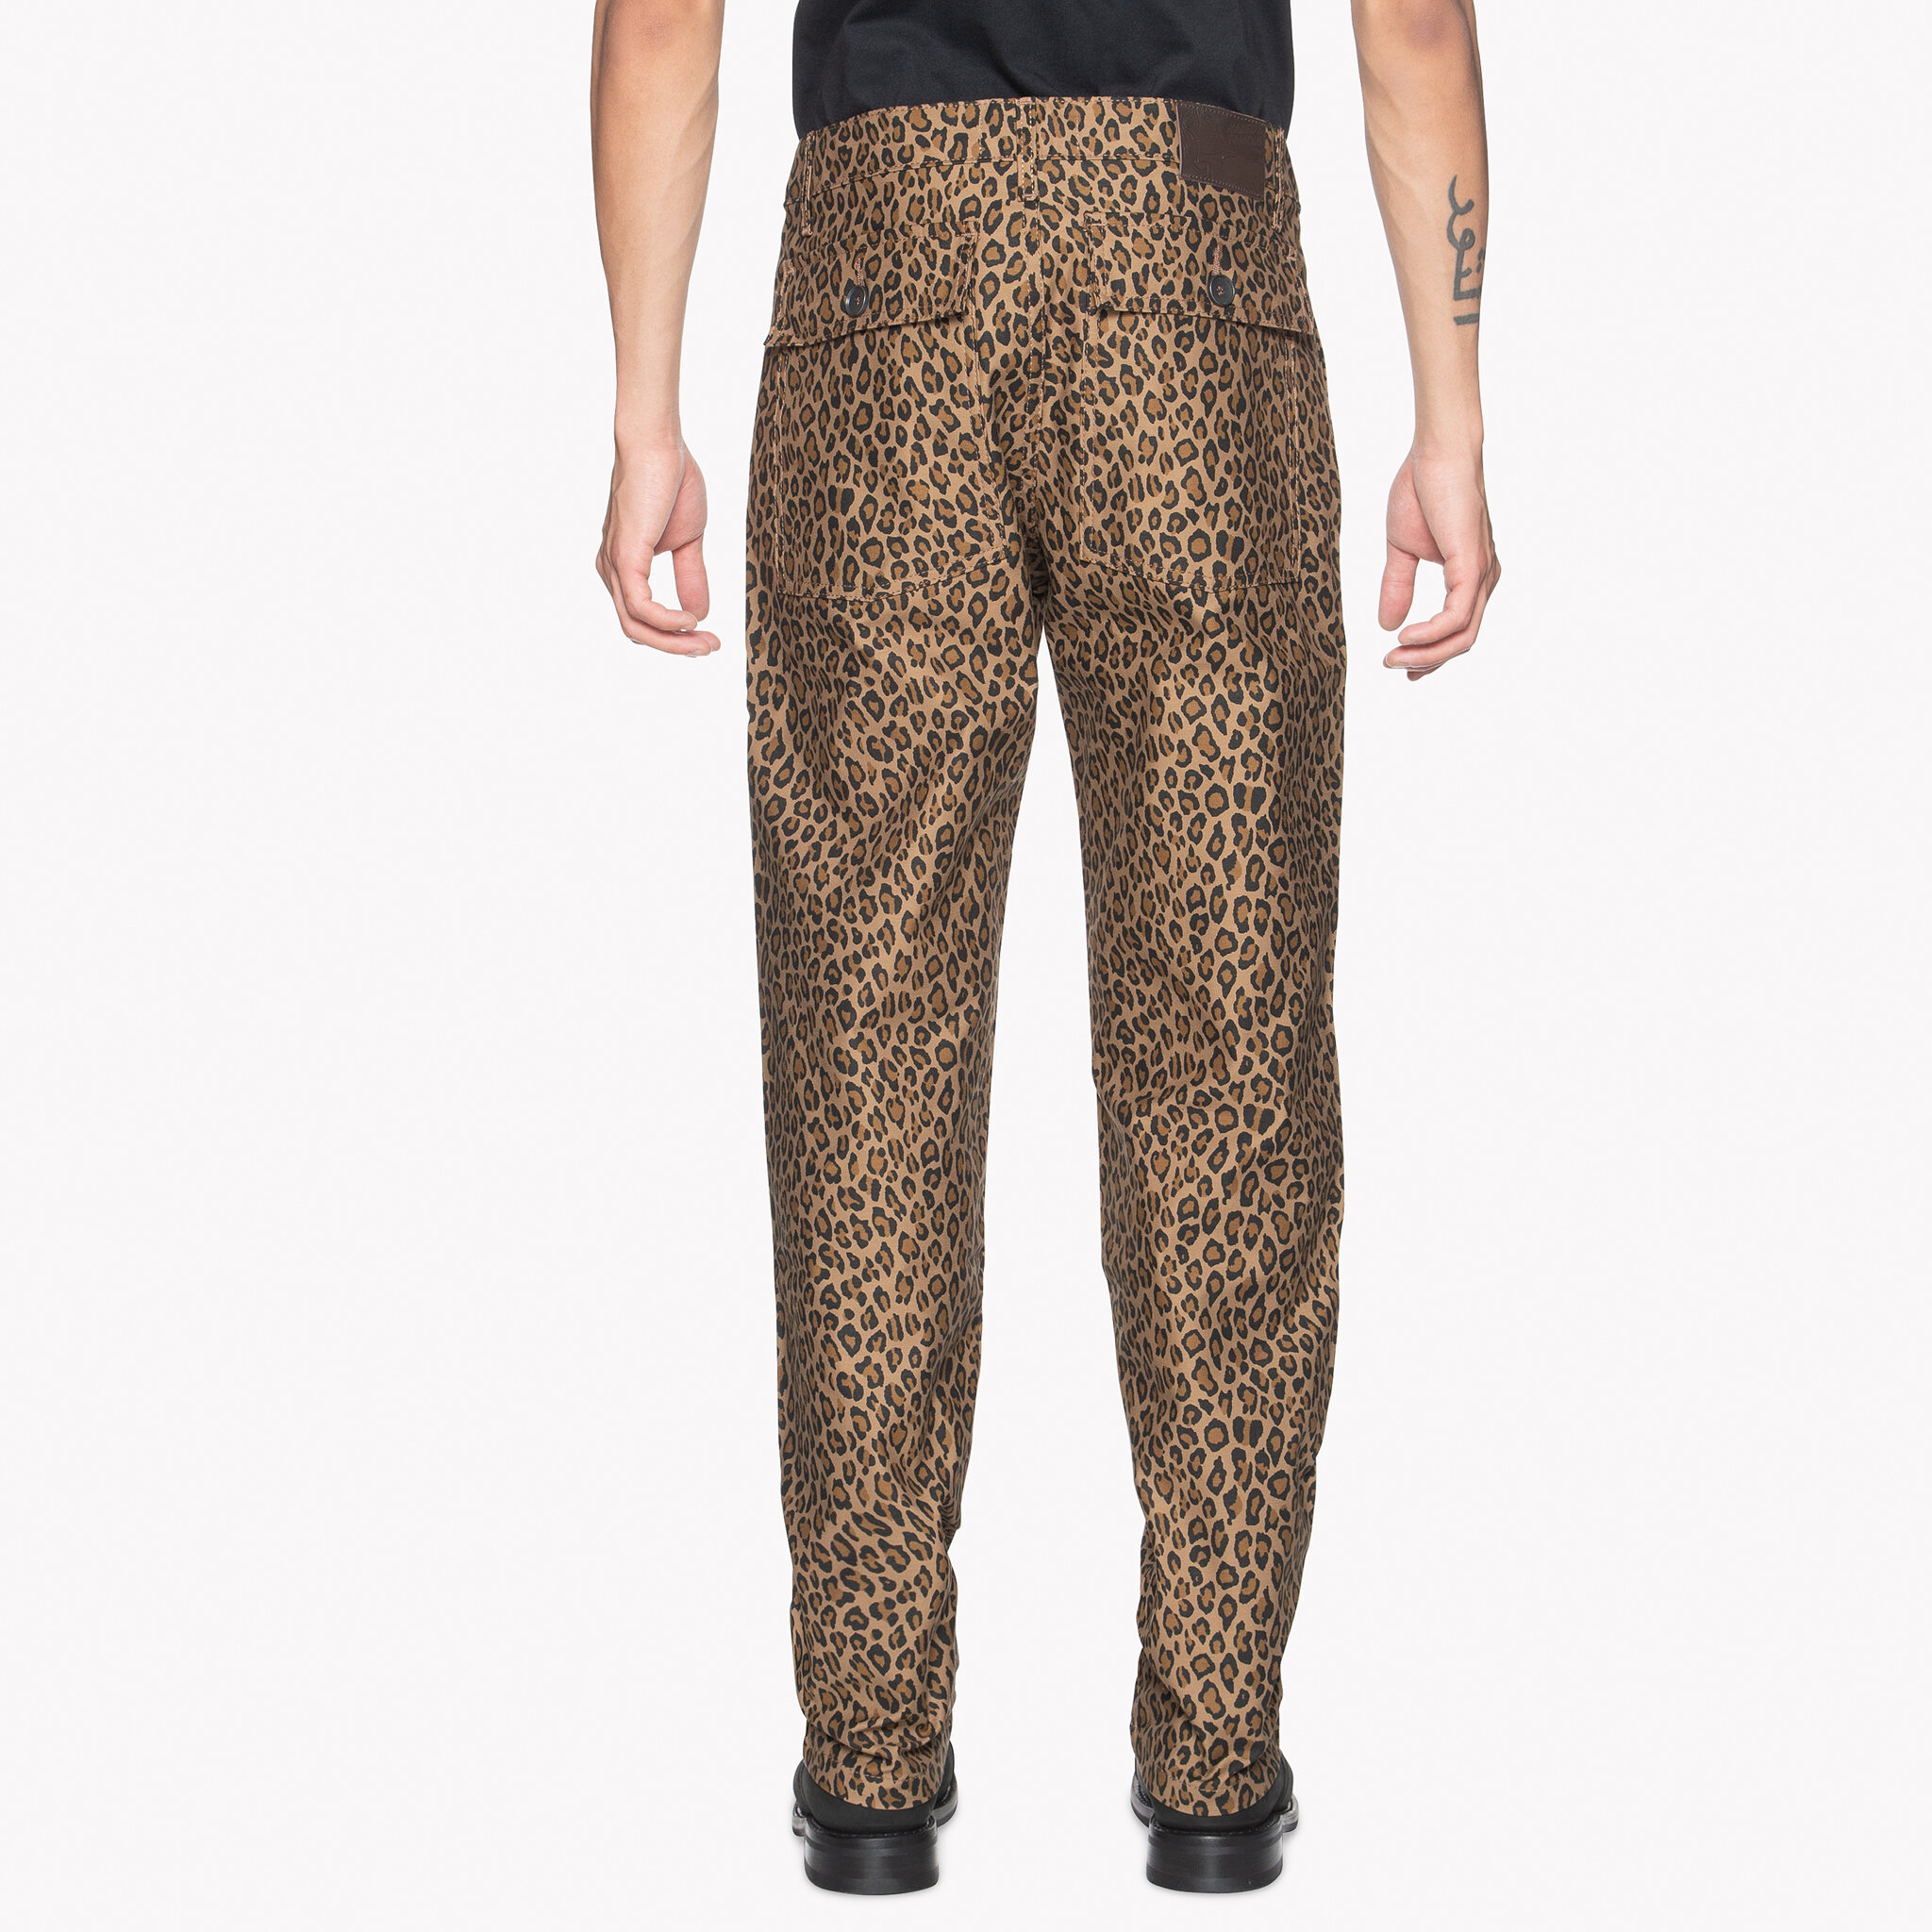 Work Pant - Leopard Print